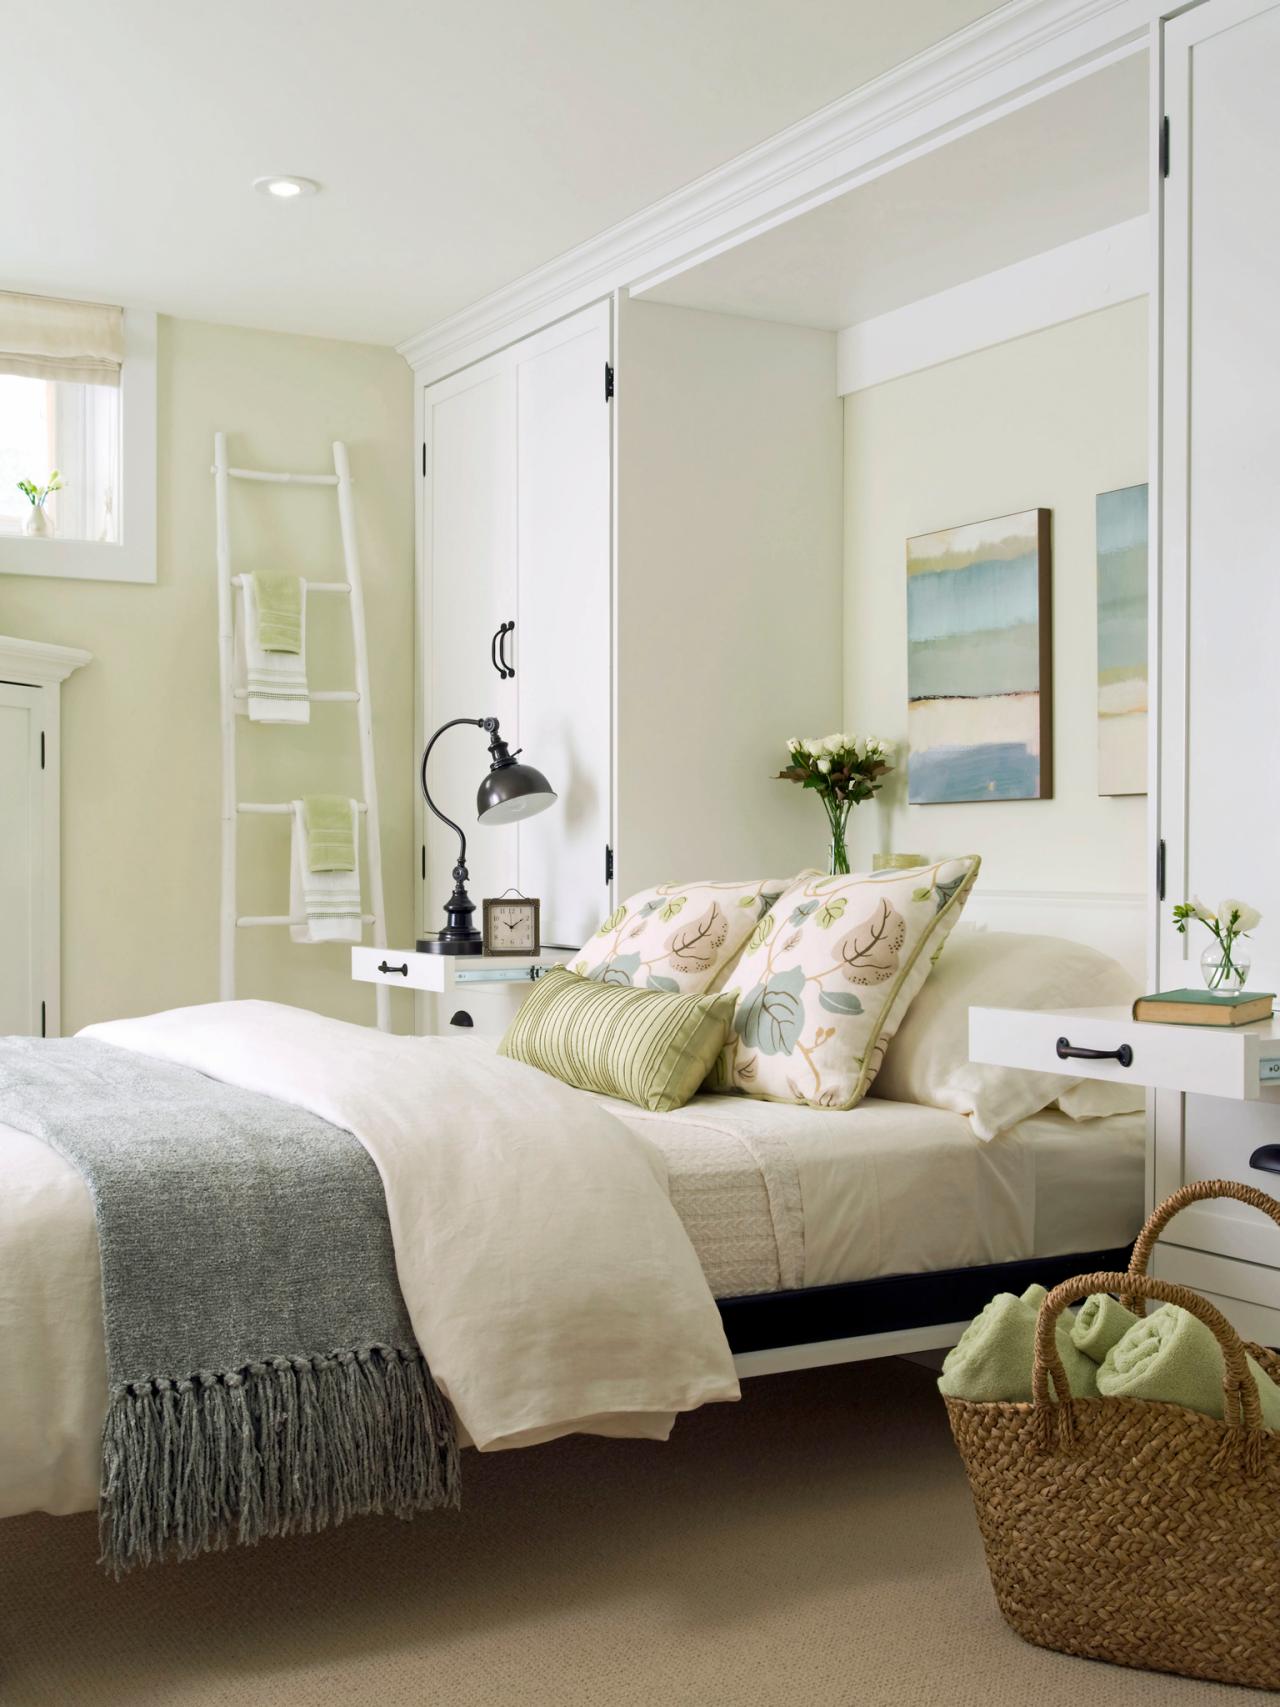 14 Ideas For Small Bedroom Decor Hgtv S Decorating Design Blog